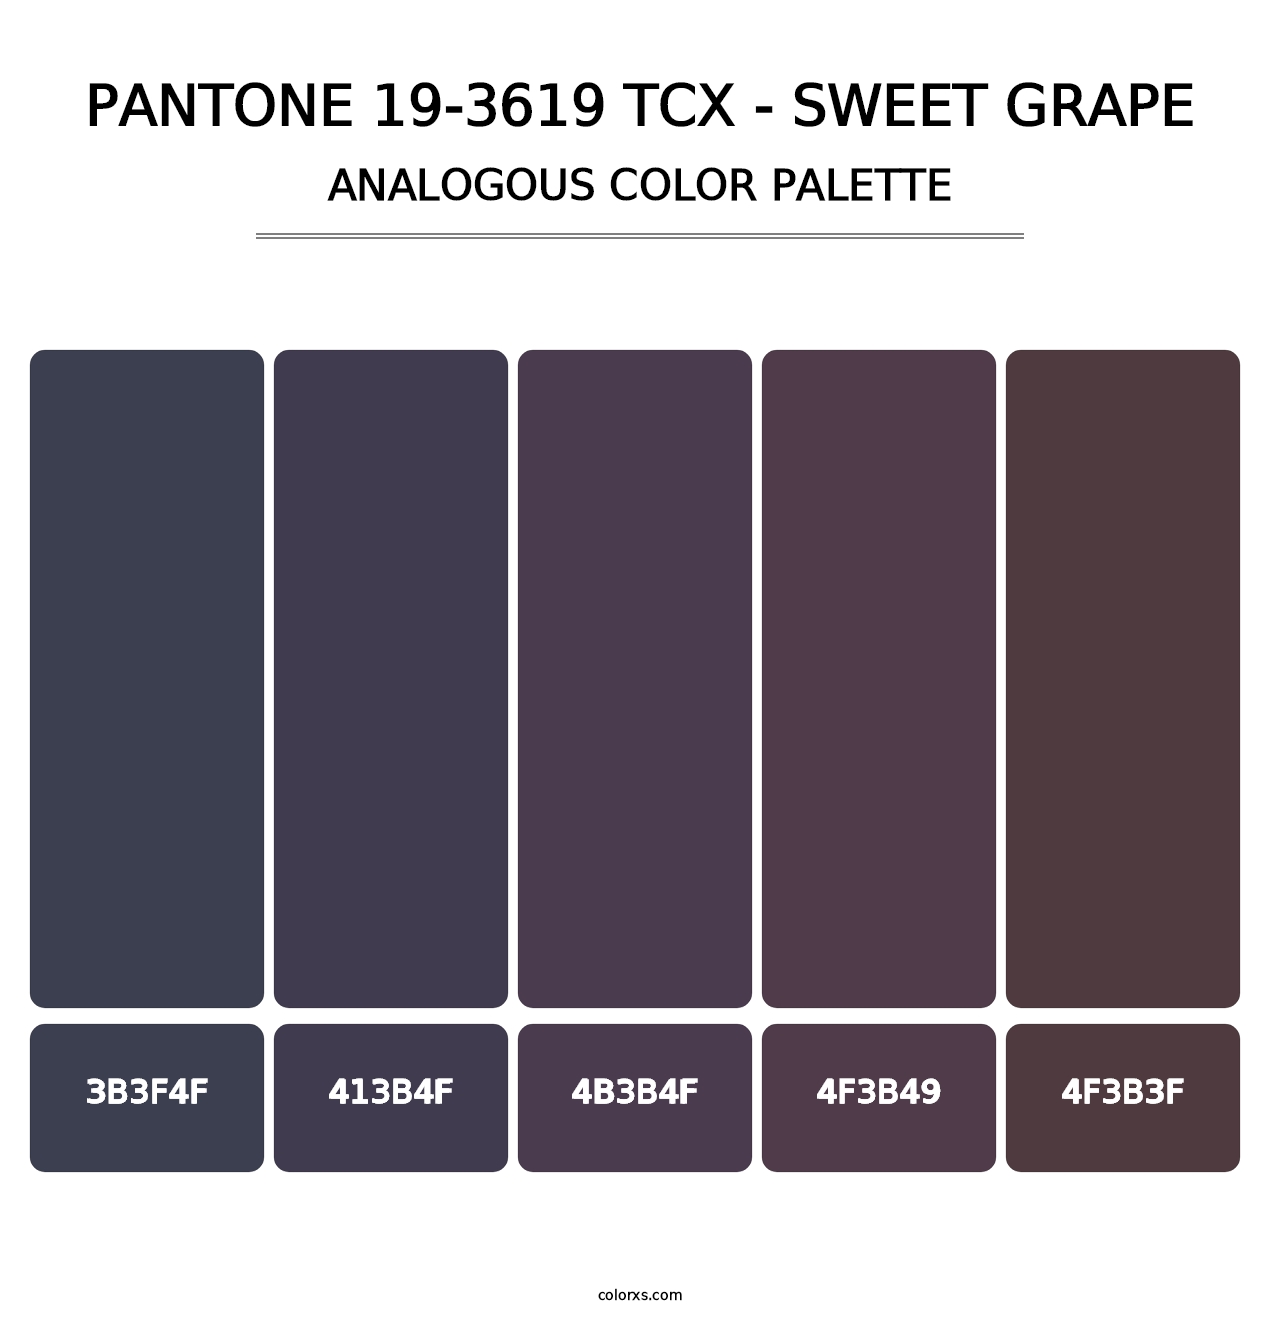 PANTONE 19-3619 TCX - Sweet Grape - Analogous Color Palette